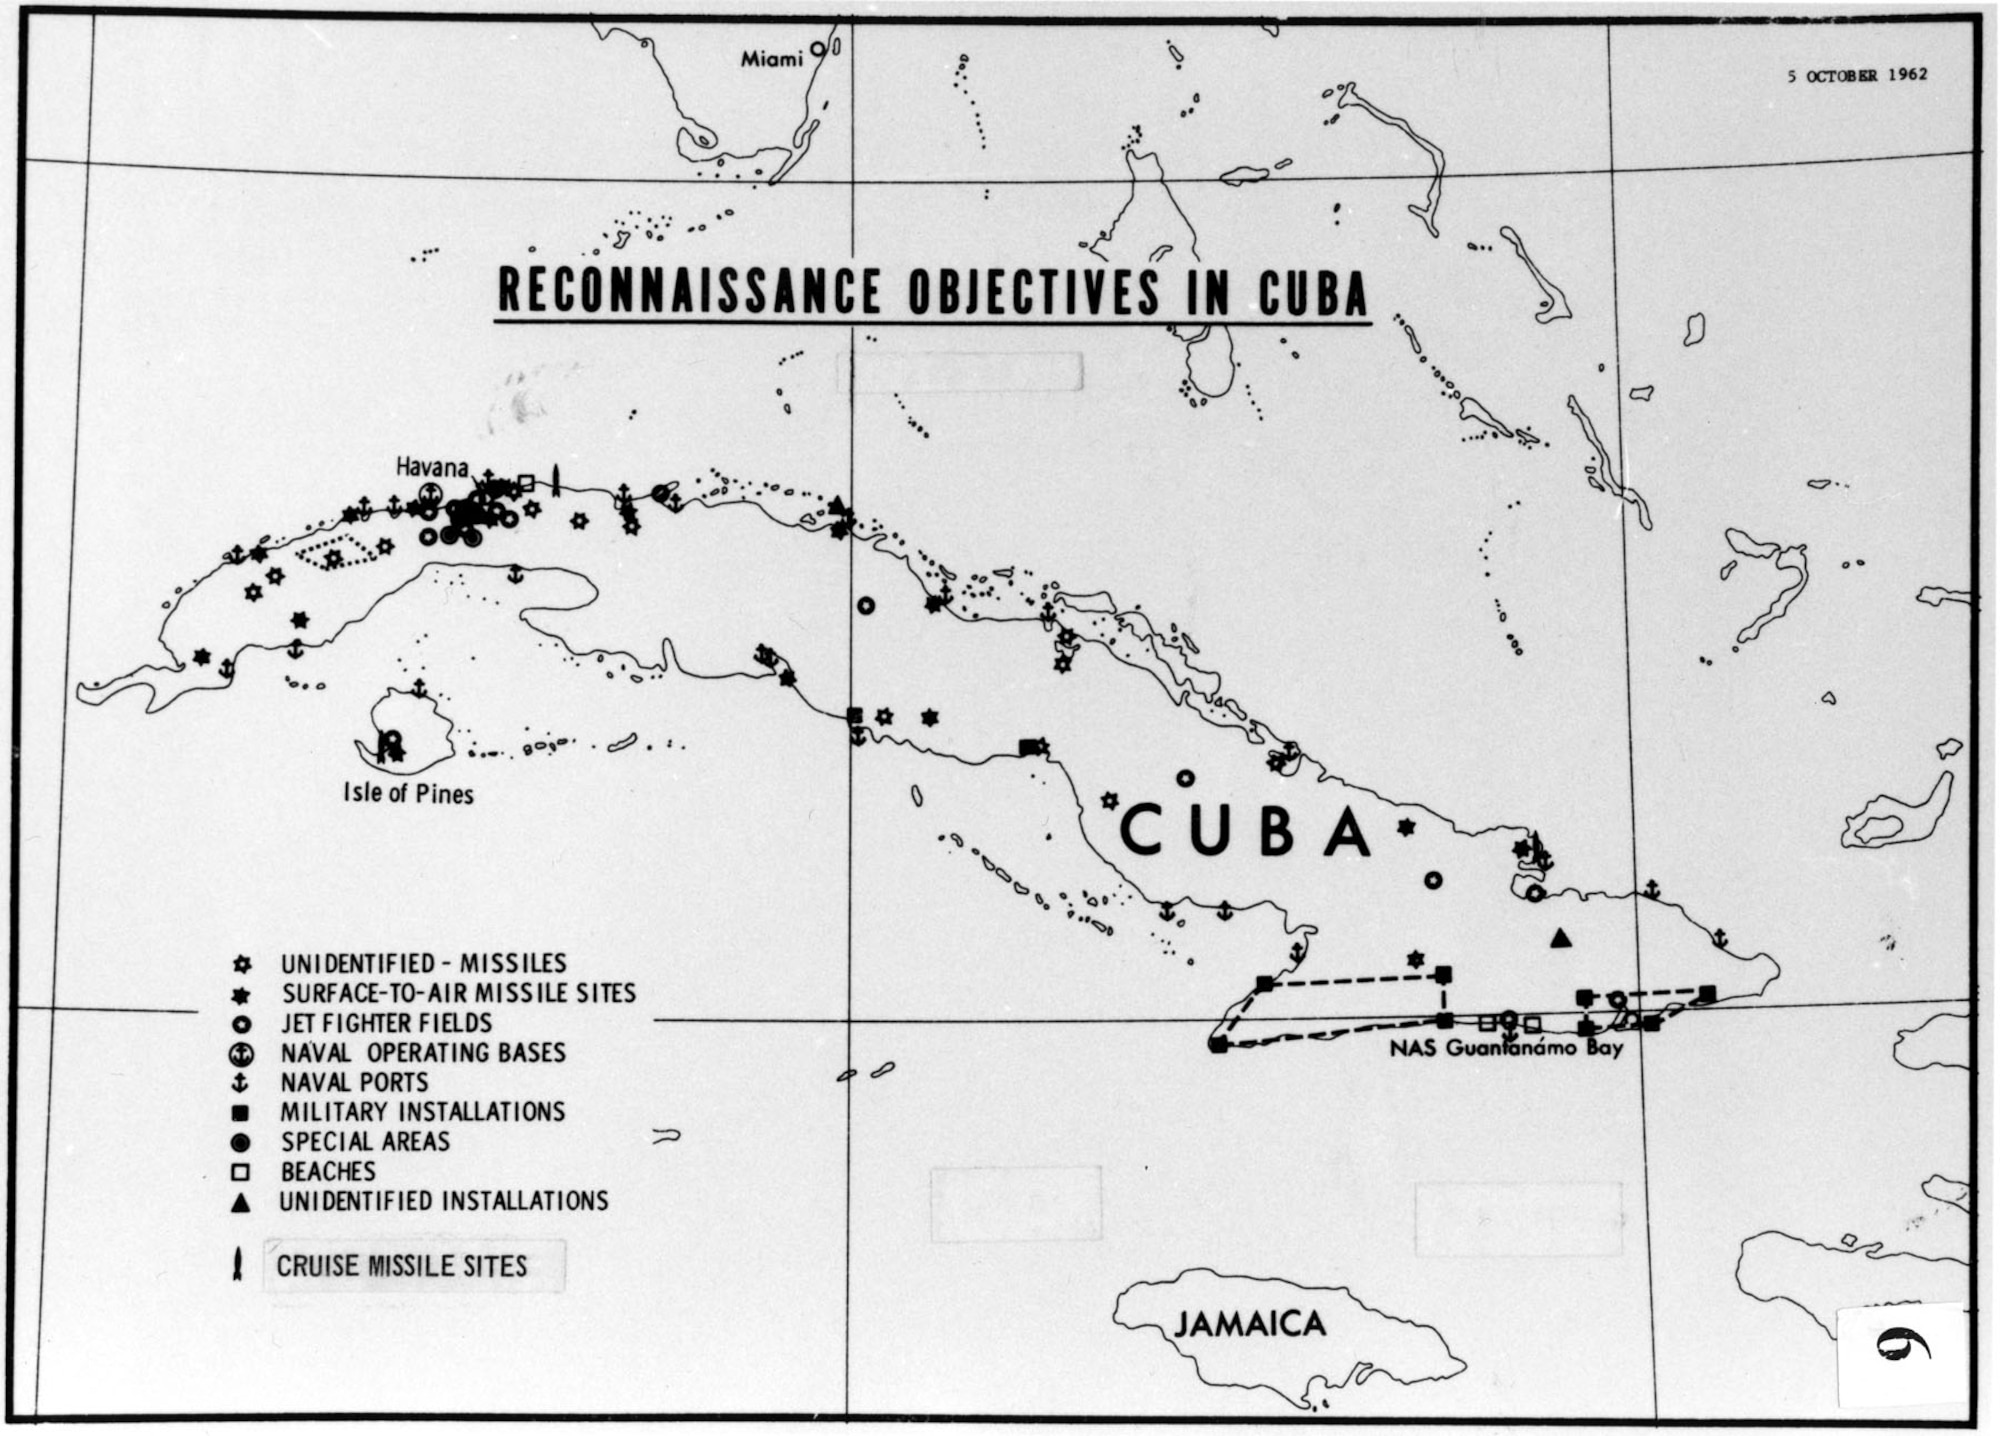 Reconnaissance objectives in Cuba, 1962. (U.S. Air Force photo)